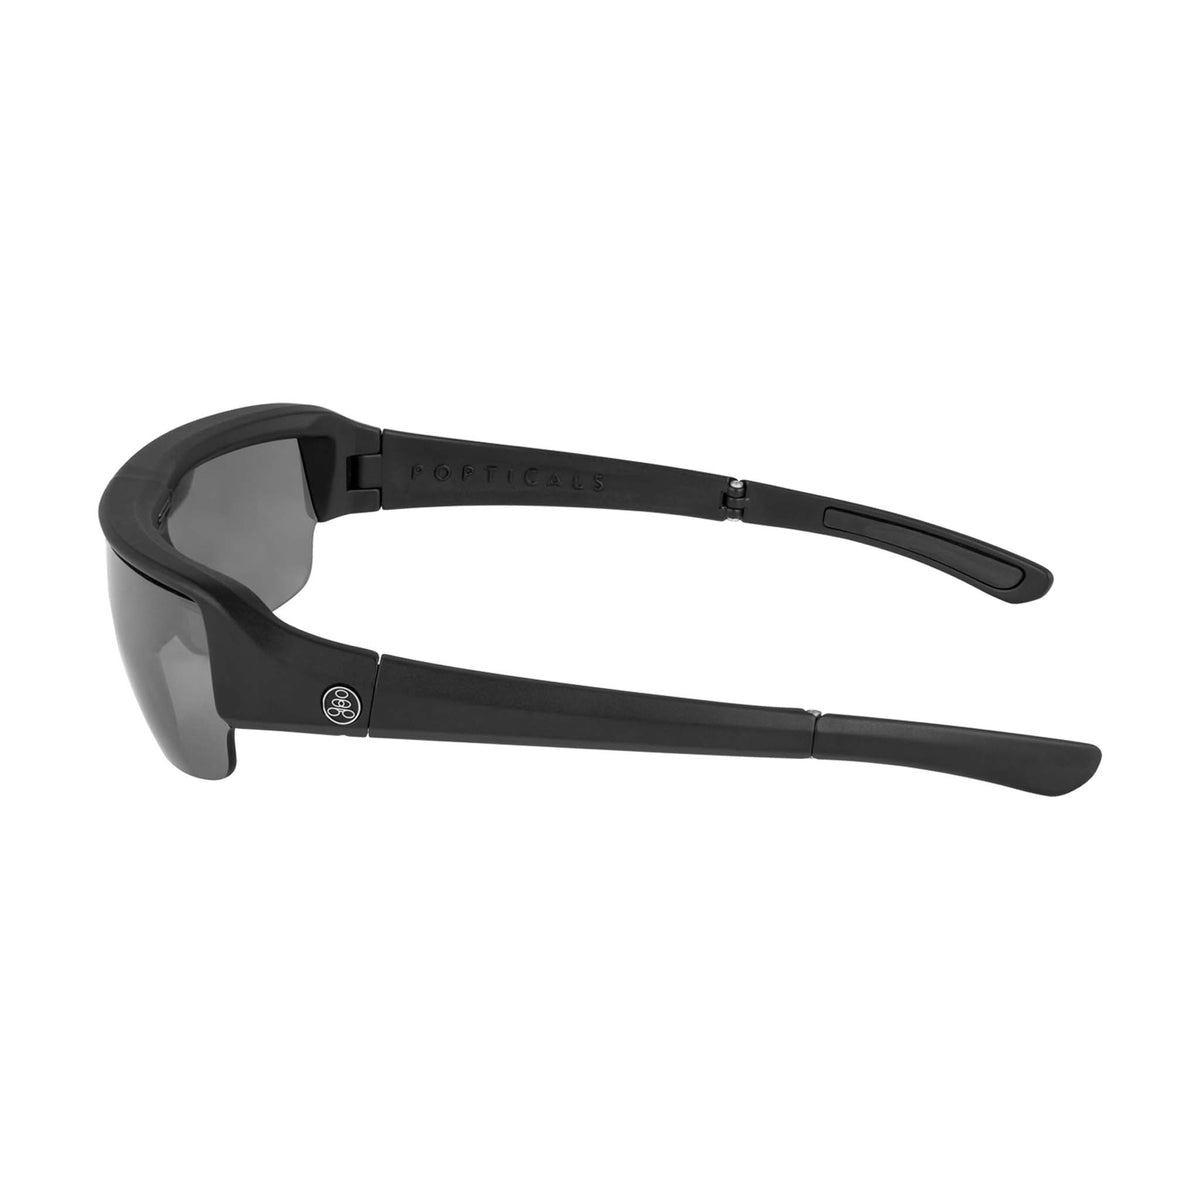 Popticals, Premium Compact Sunglasses, PopGun, 010010-BMGS, Standard Sunglasses, Matte Black Frame, Gray Lenses, Side View